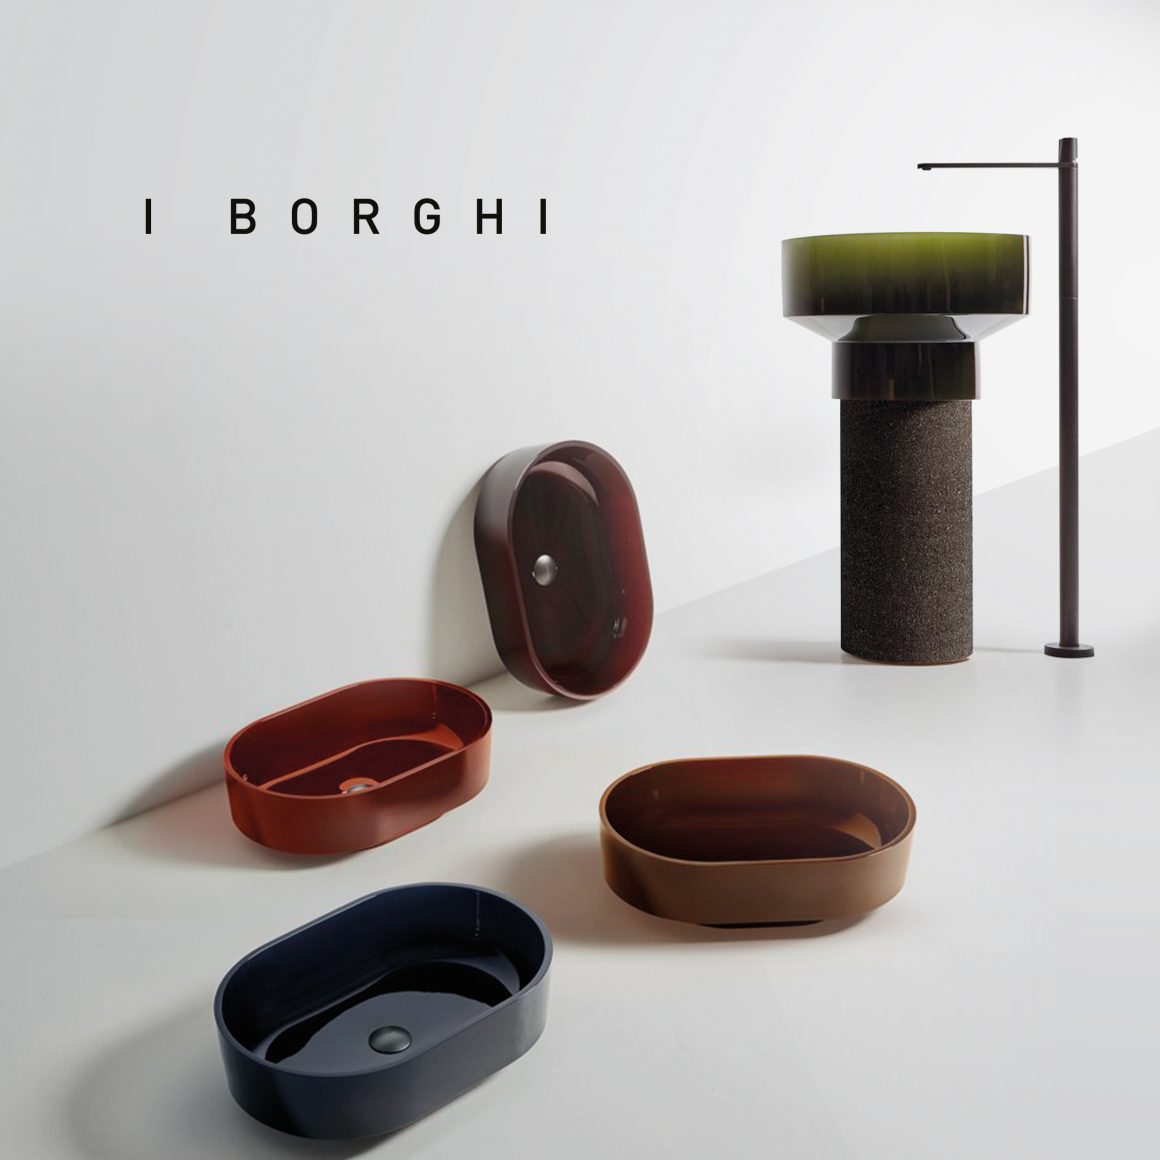 I Borghi by Antonio lupi